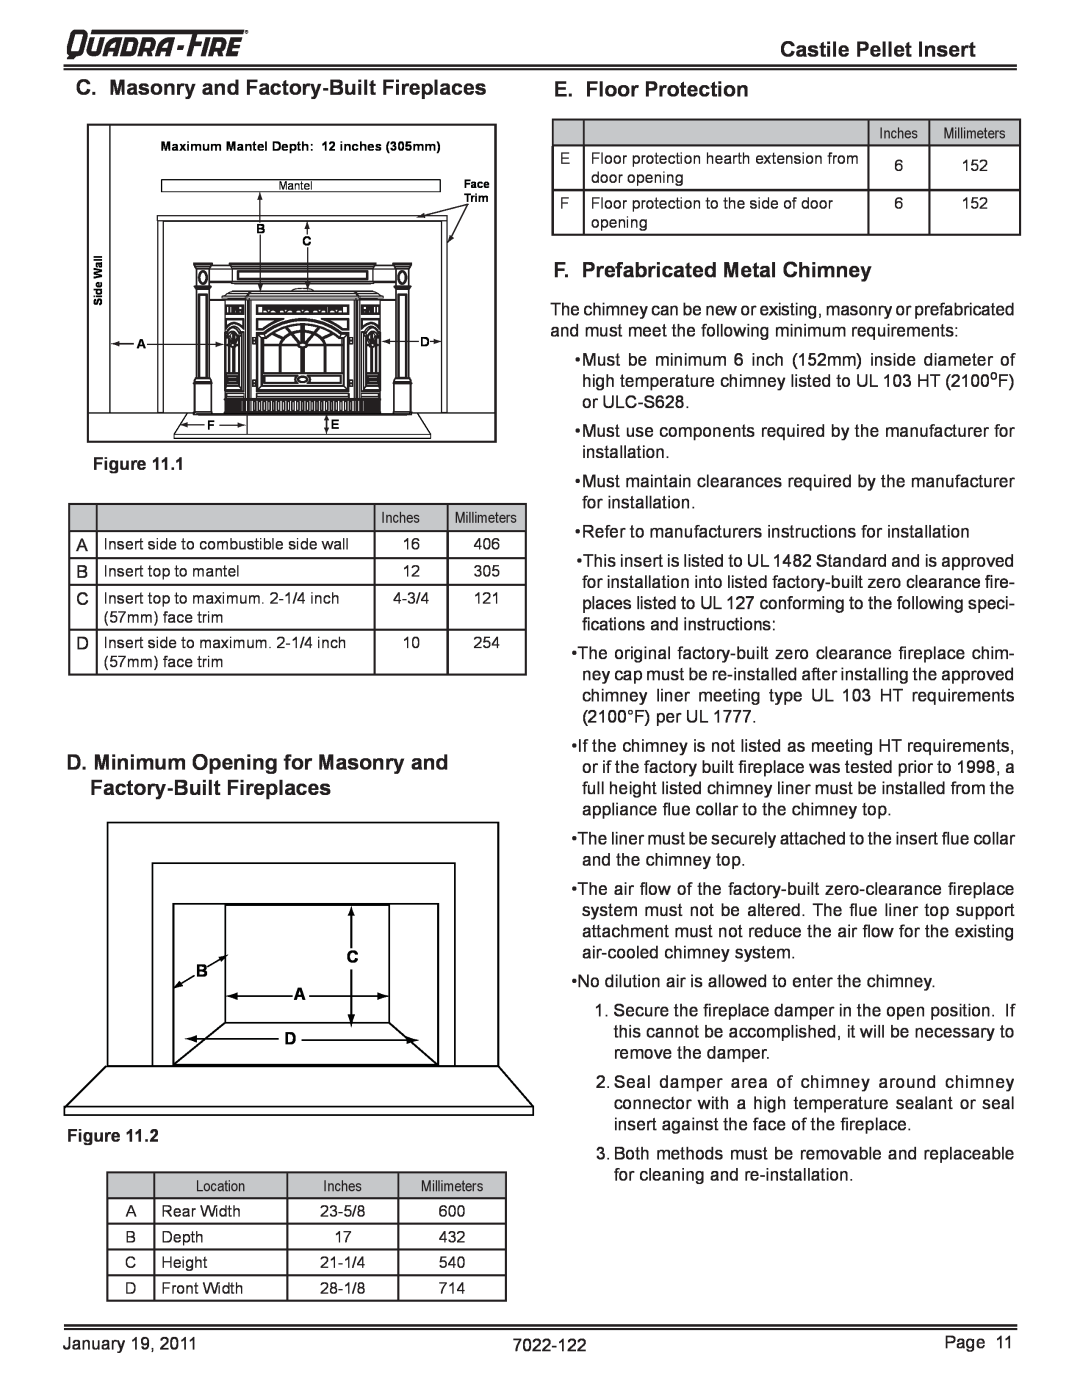 Quadra-Fire CASTILEI-MBK C. Masonry and Factory-BuiltFireplaces, Castile Pellet Insert E. Floor Protection, Figure 